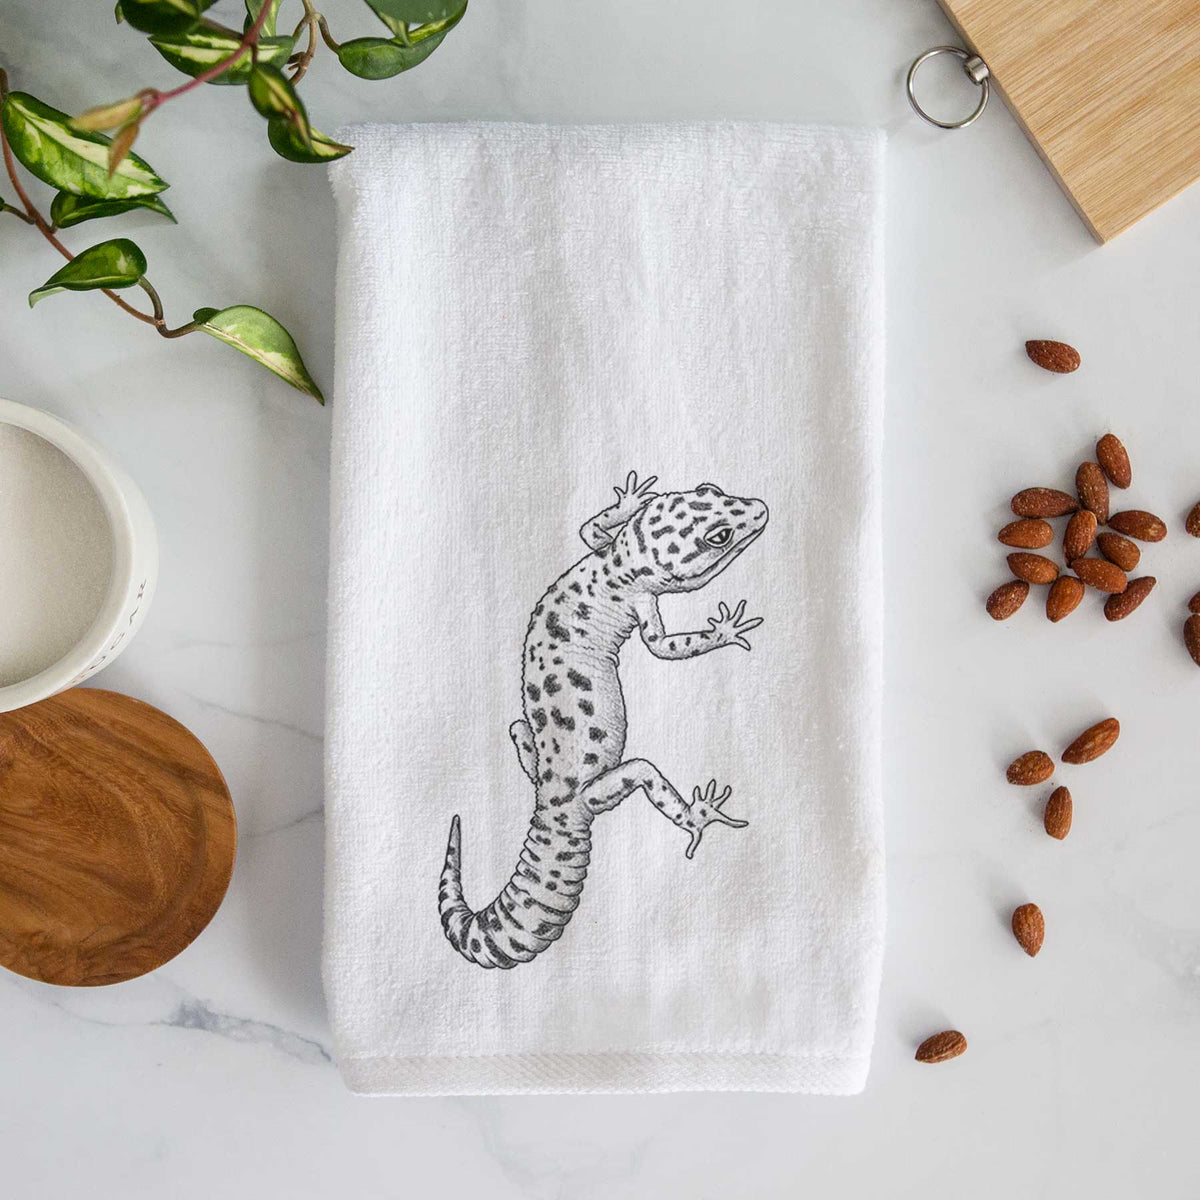 Eublepharis macularius - Leopard Gecko Hand Towel